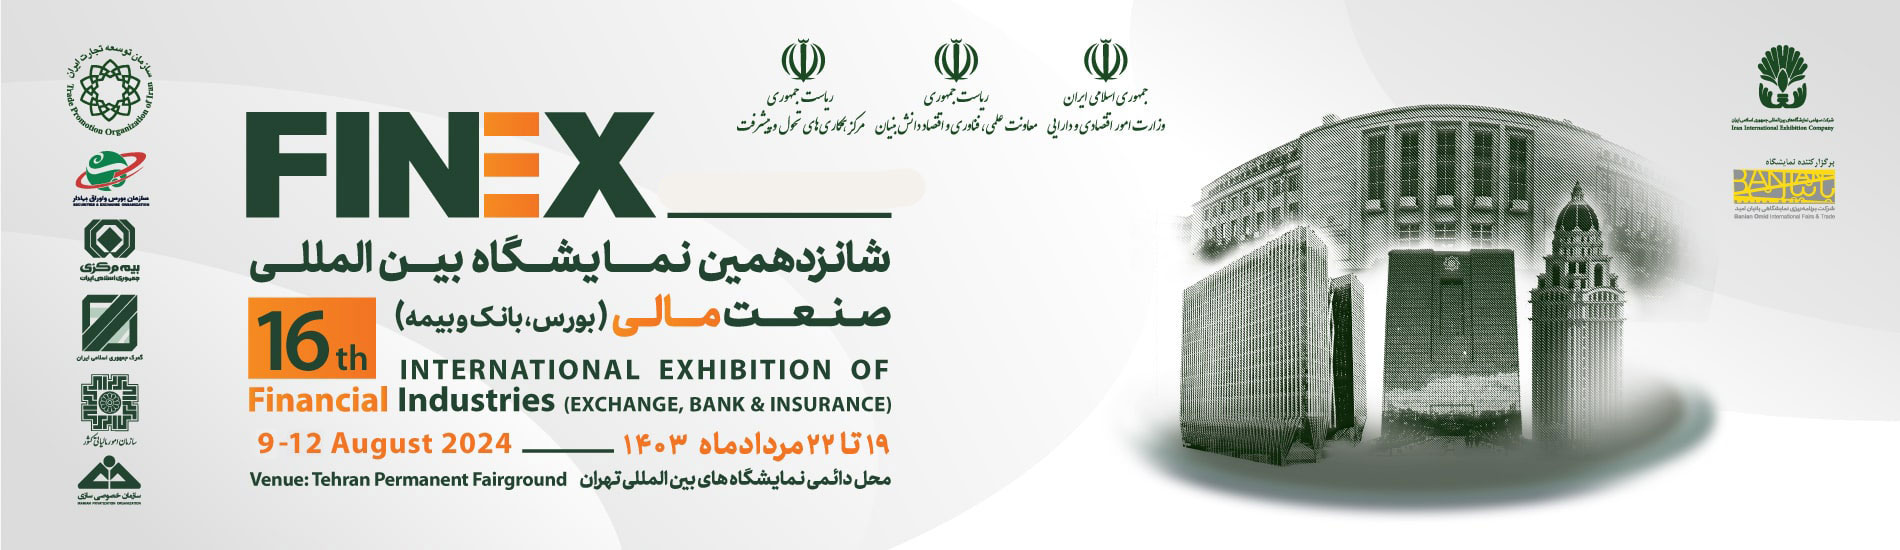 Iranfinex 2024 poster 04 - The 16th International Financial Industries (Exchange, Bank & Insurance) Exhibition 2024 in Iran/Tehran